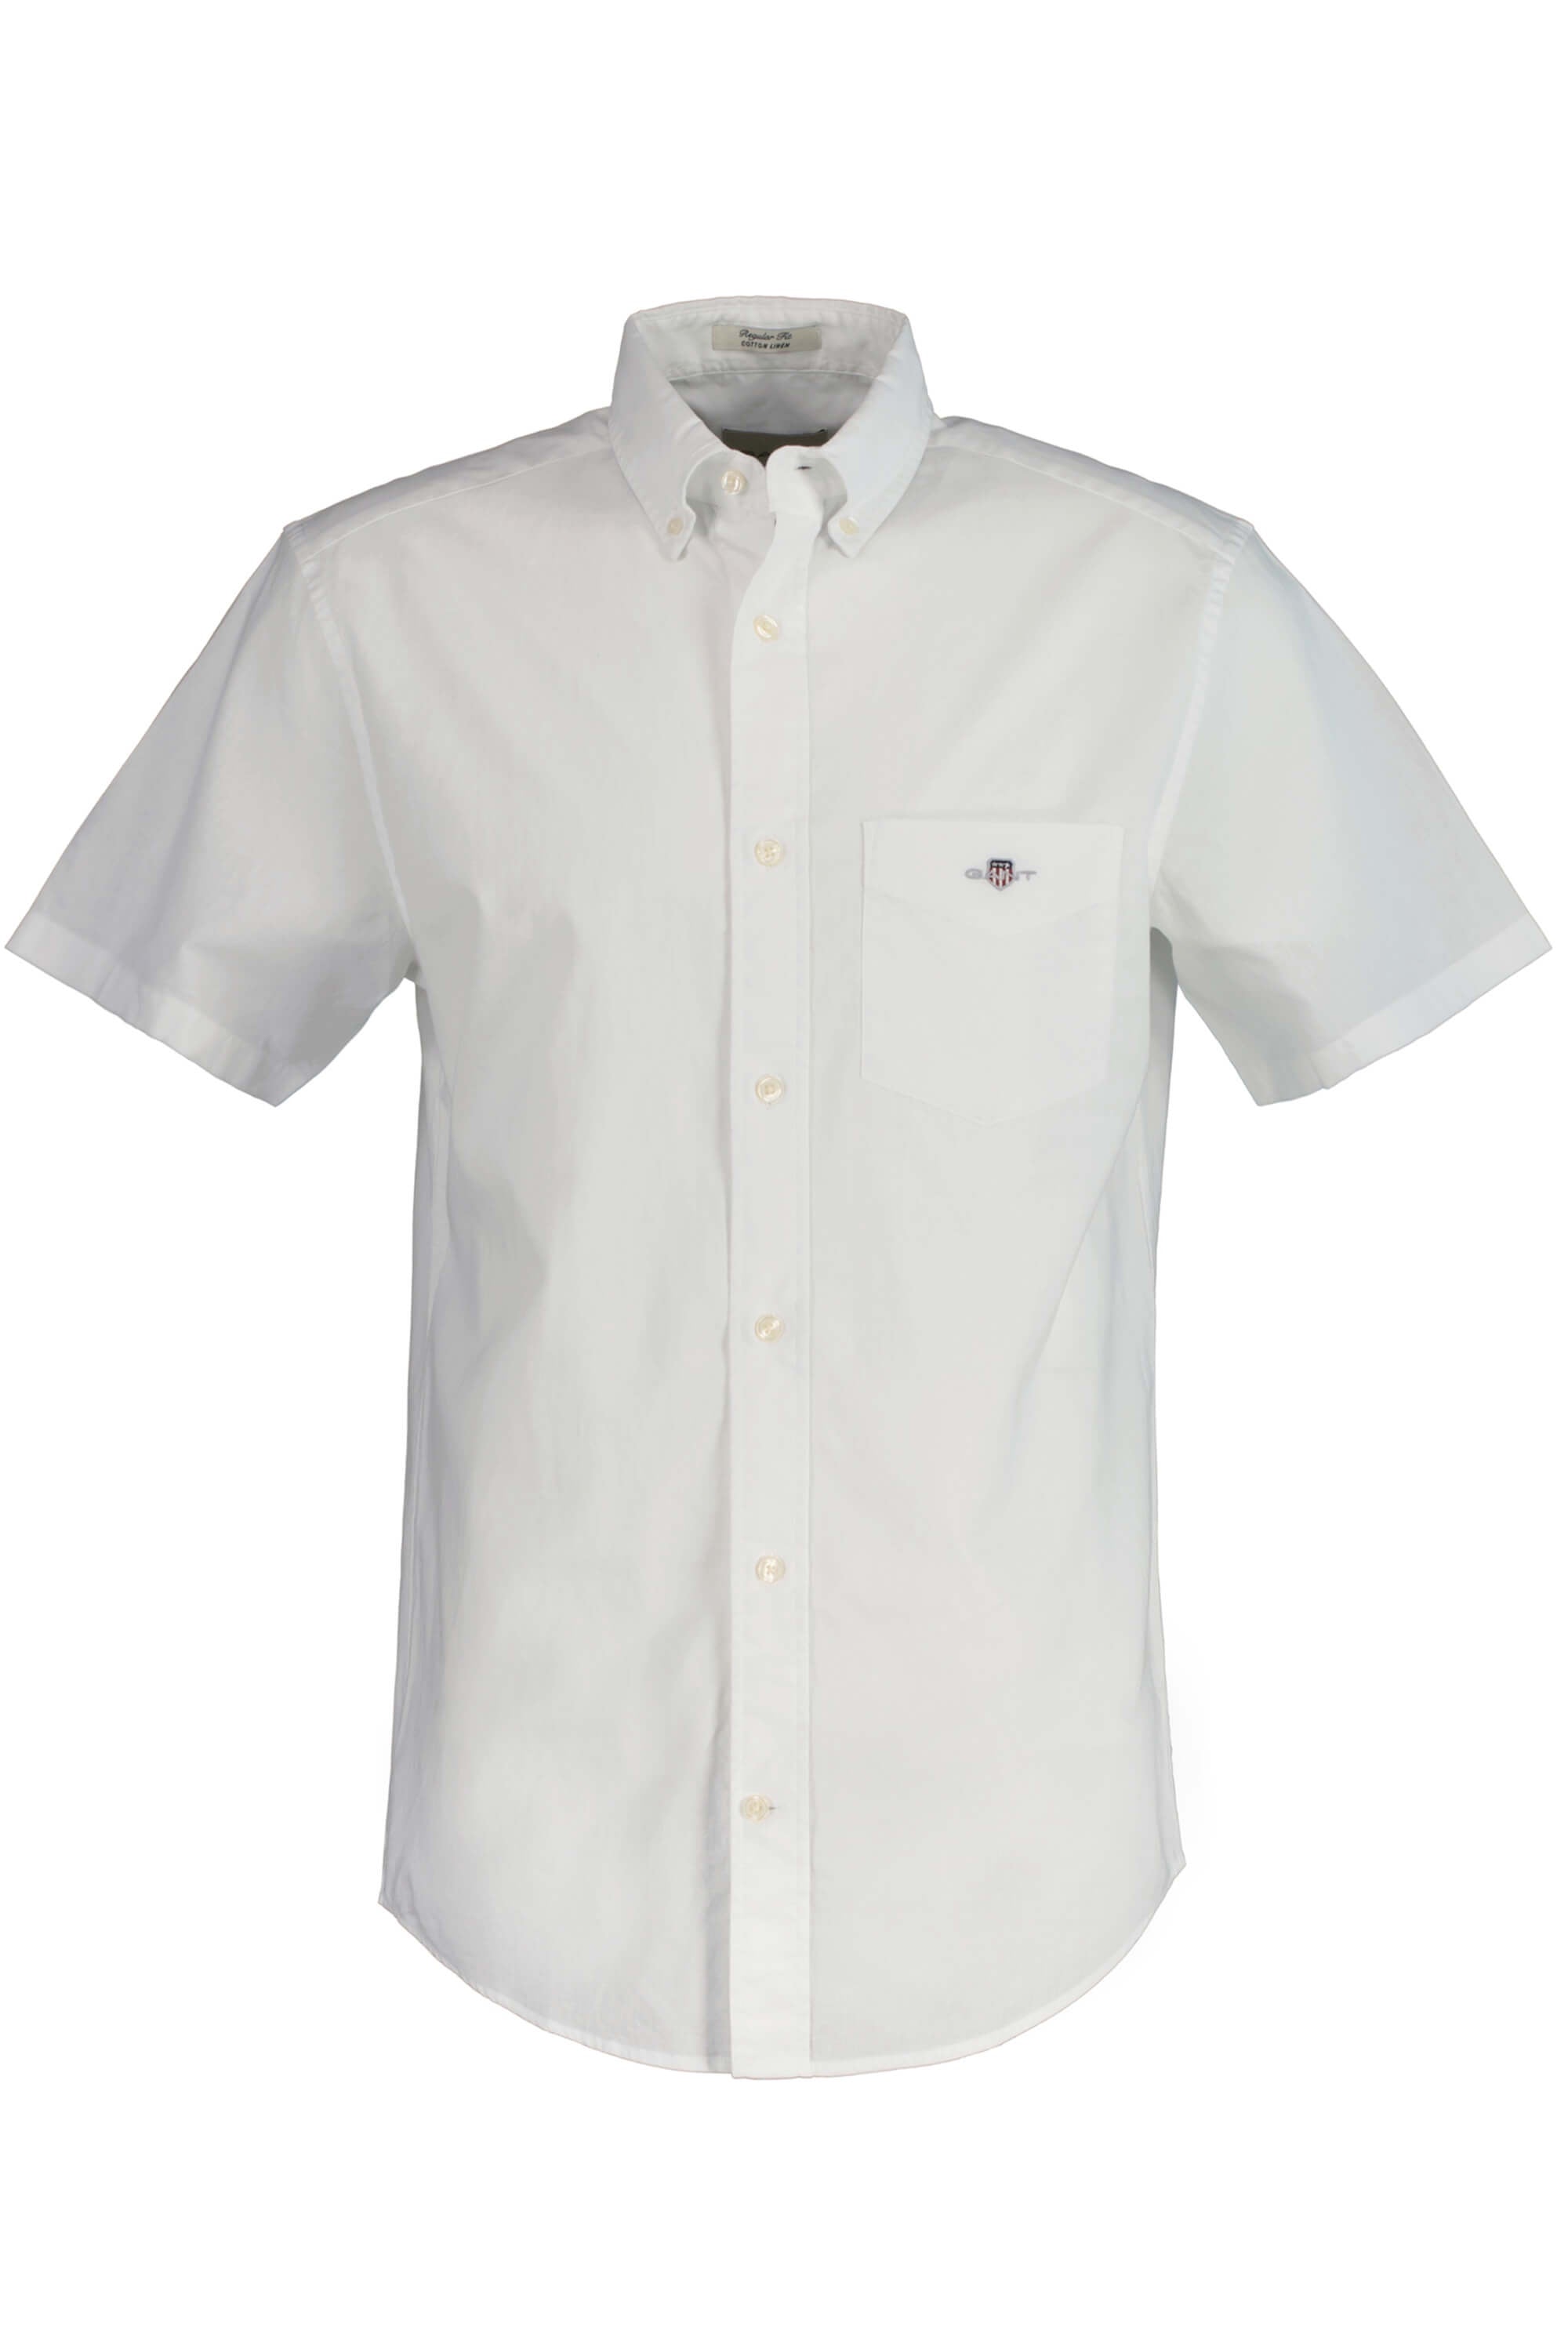 Gant Cotton Linen Shirt SS White